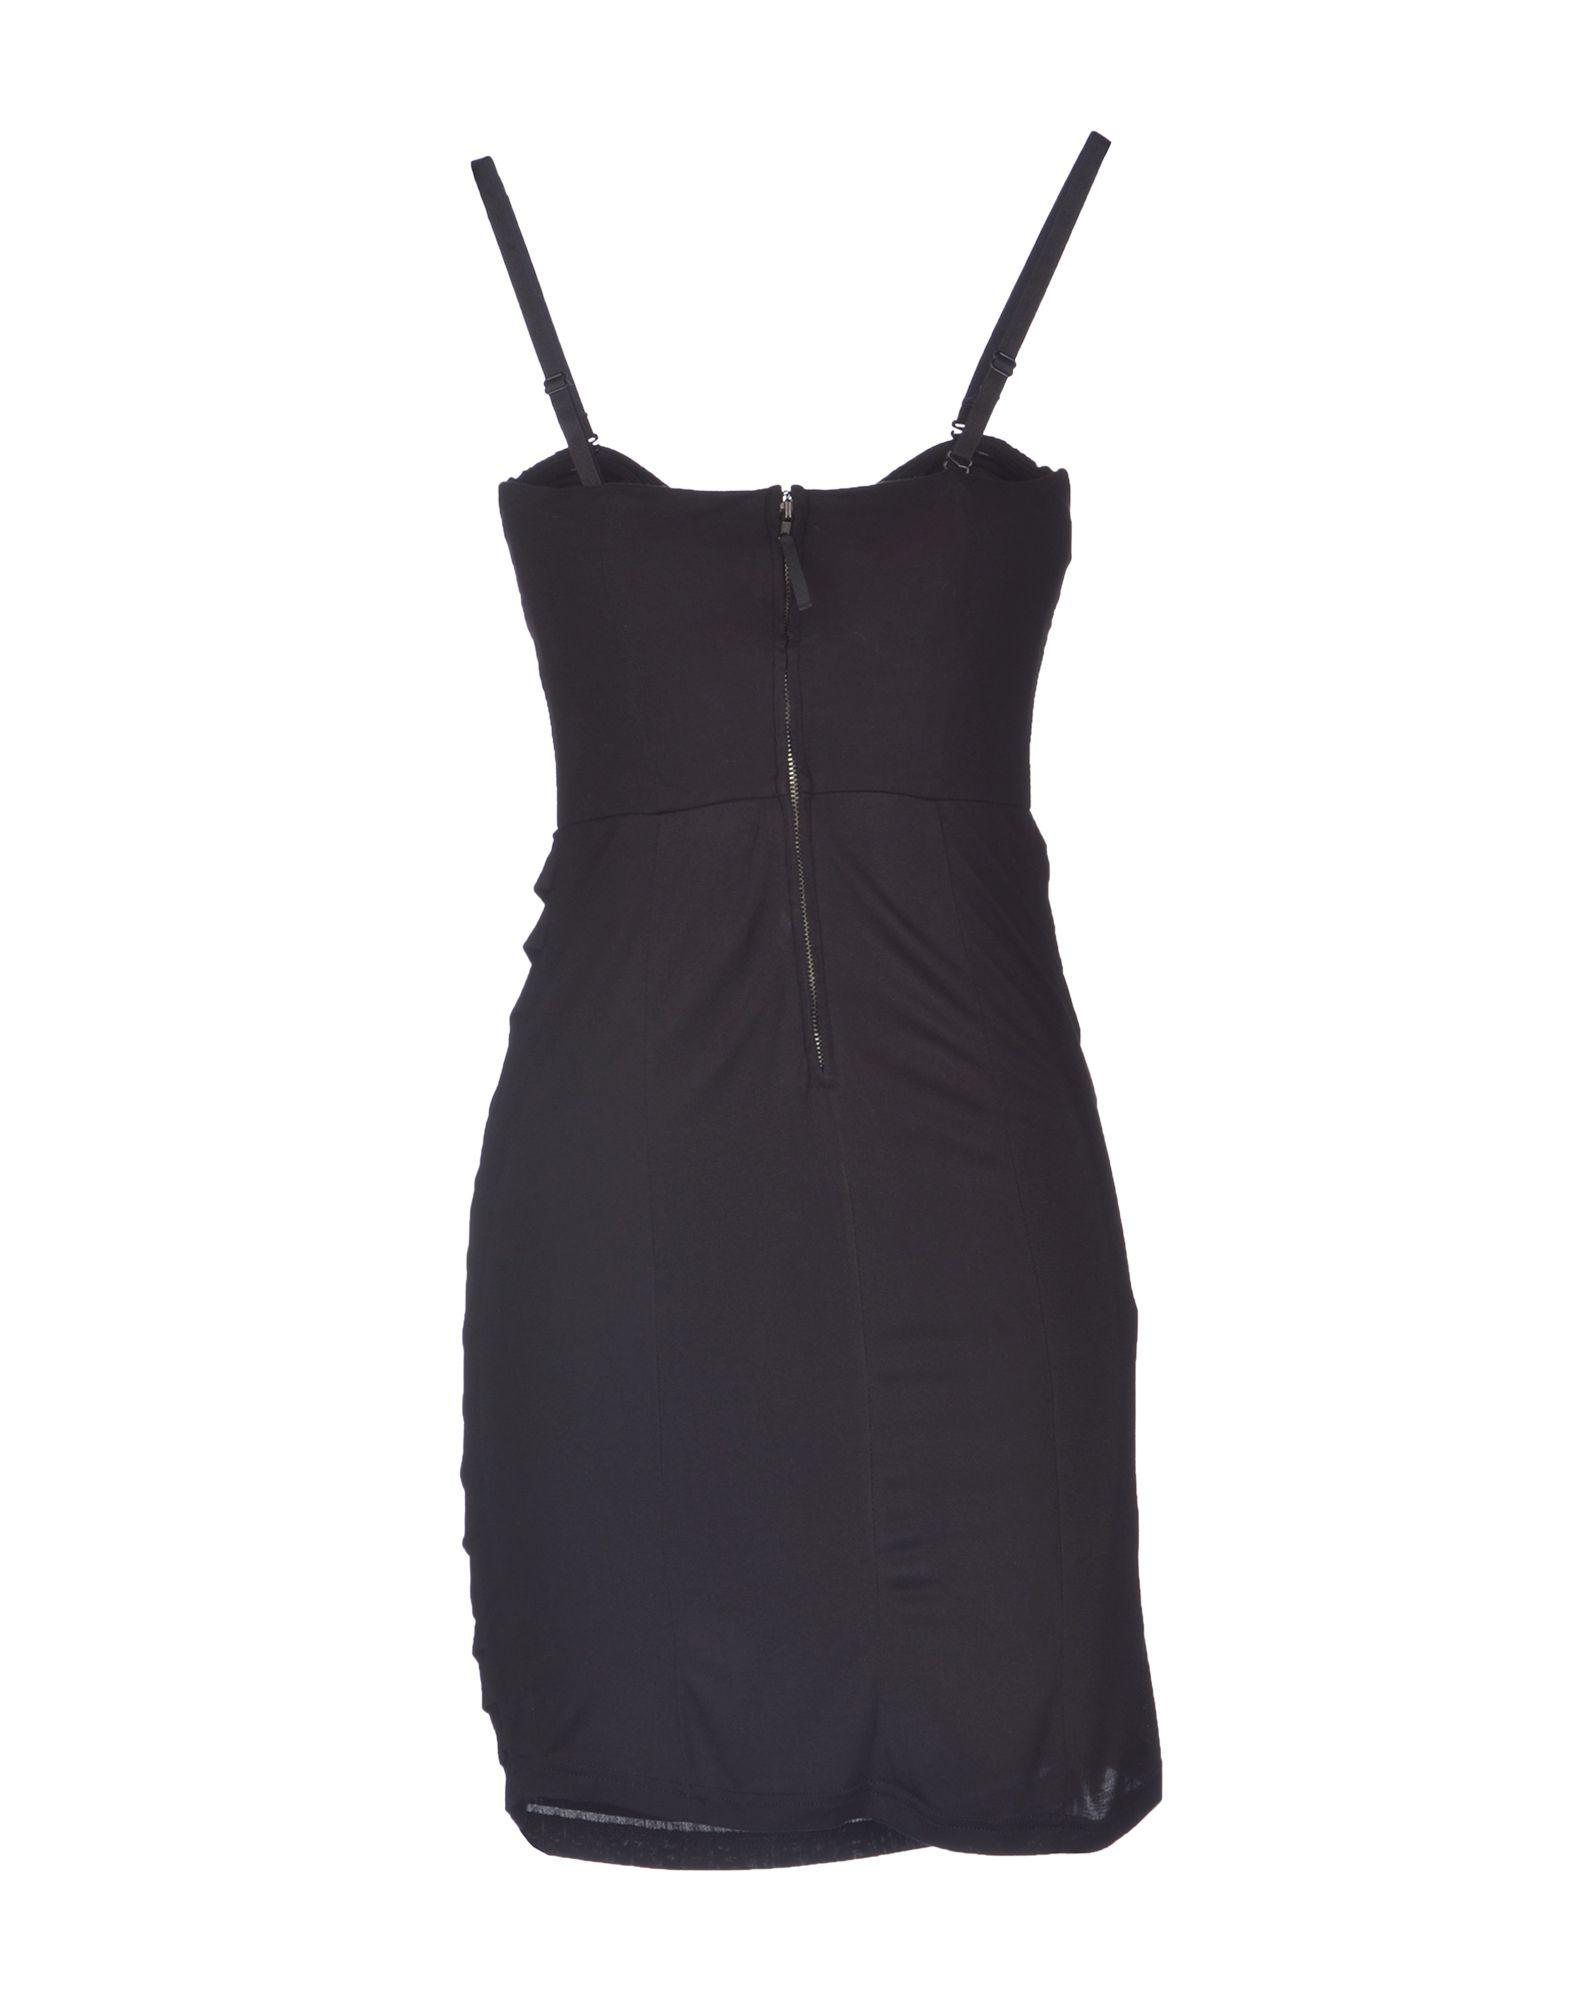 Lyst - Guess Short Dress in Black